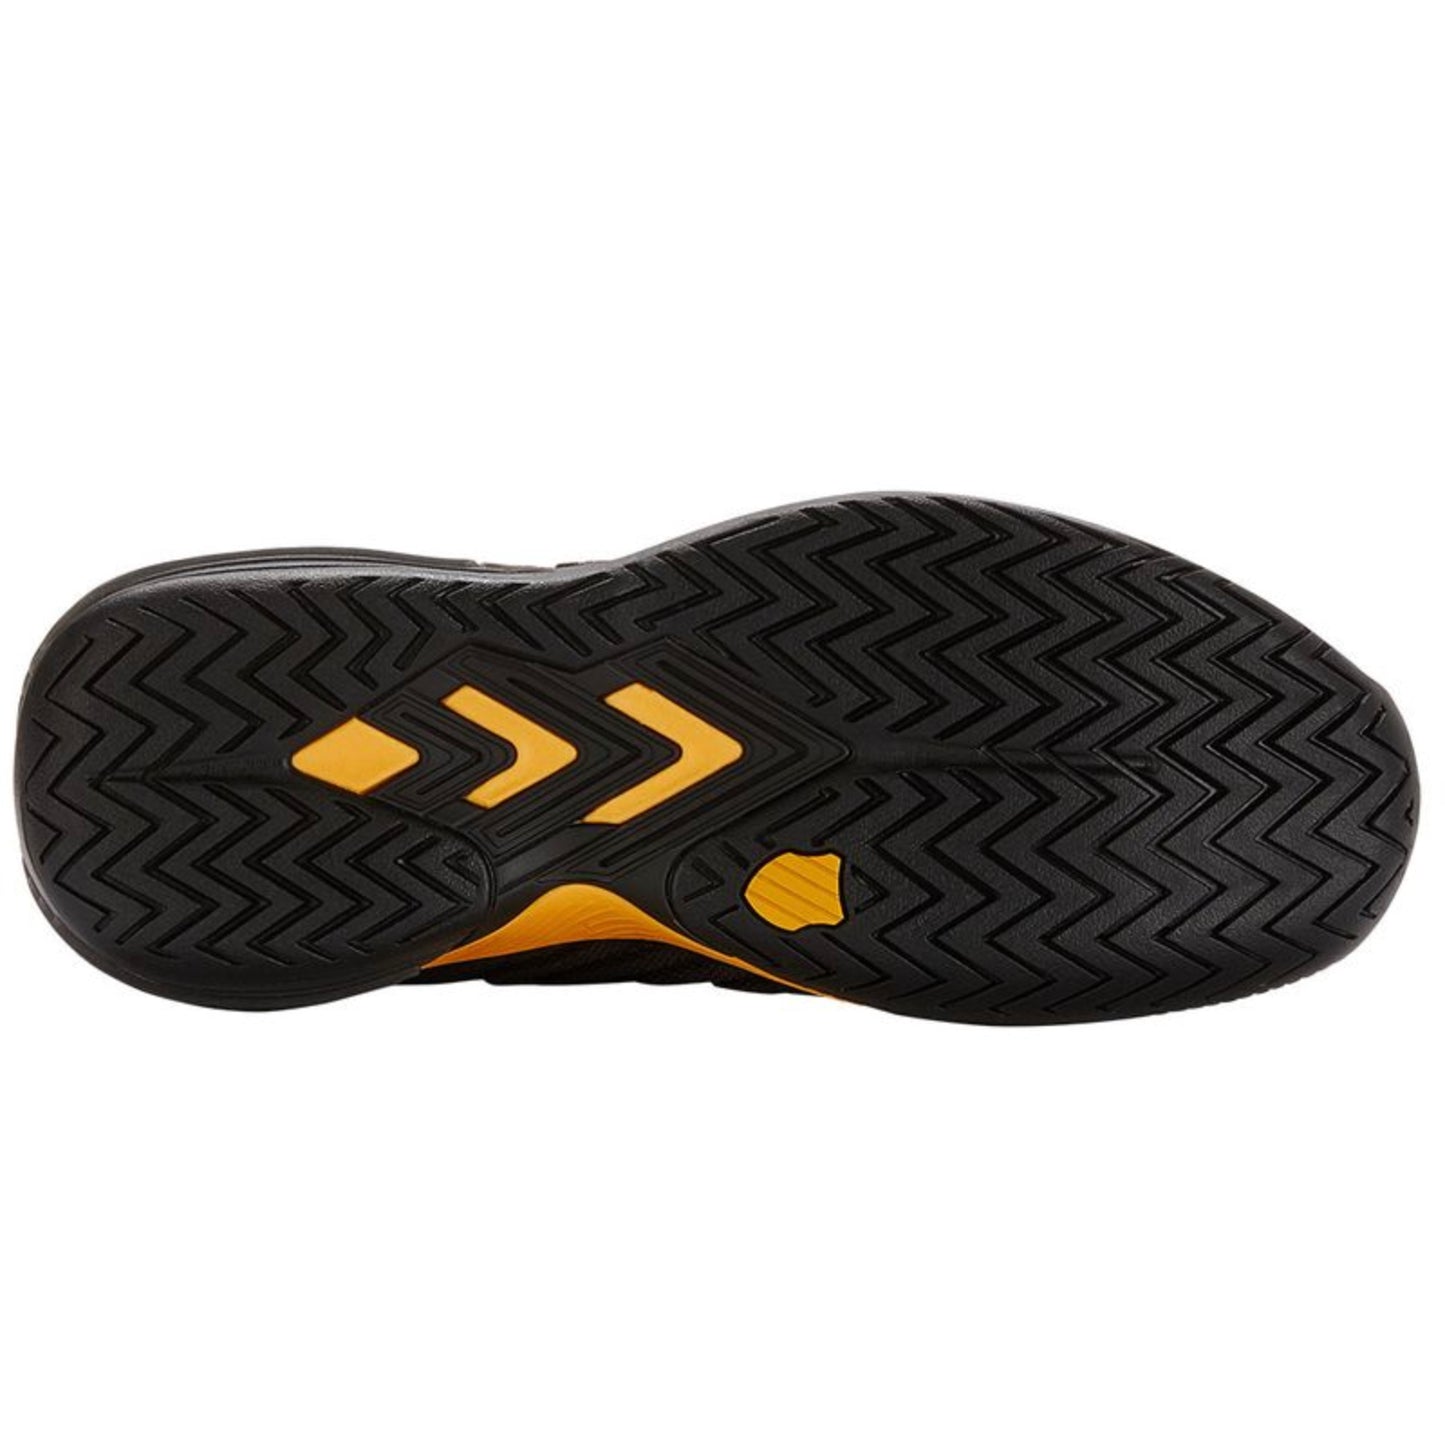 K-Swiss Ultrashot 3 men's tennis shoes - Black/Yellow 6988-071